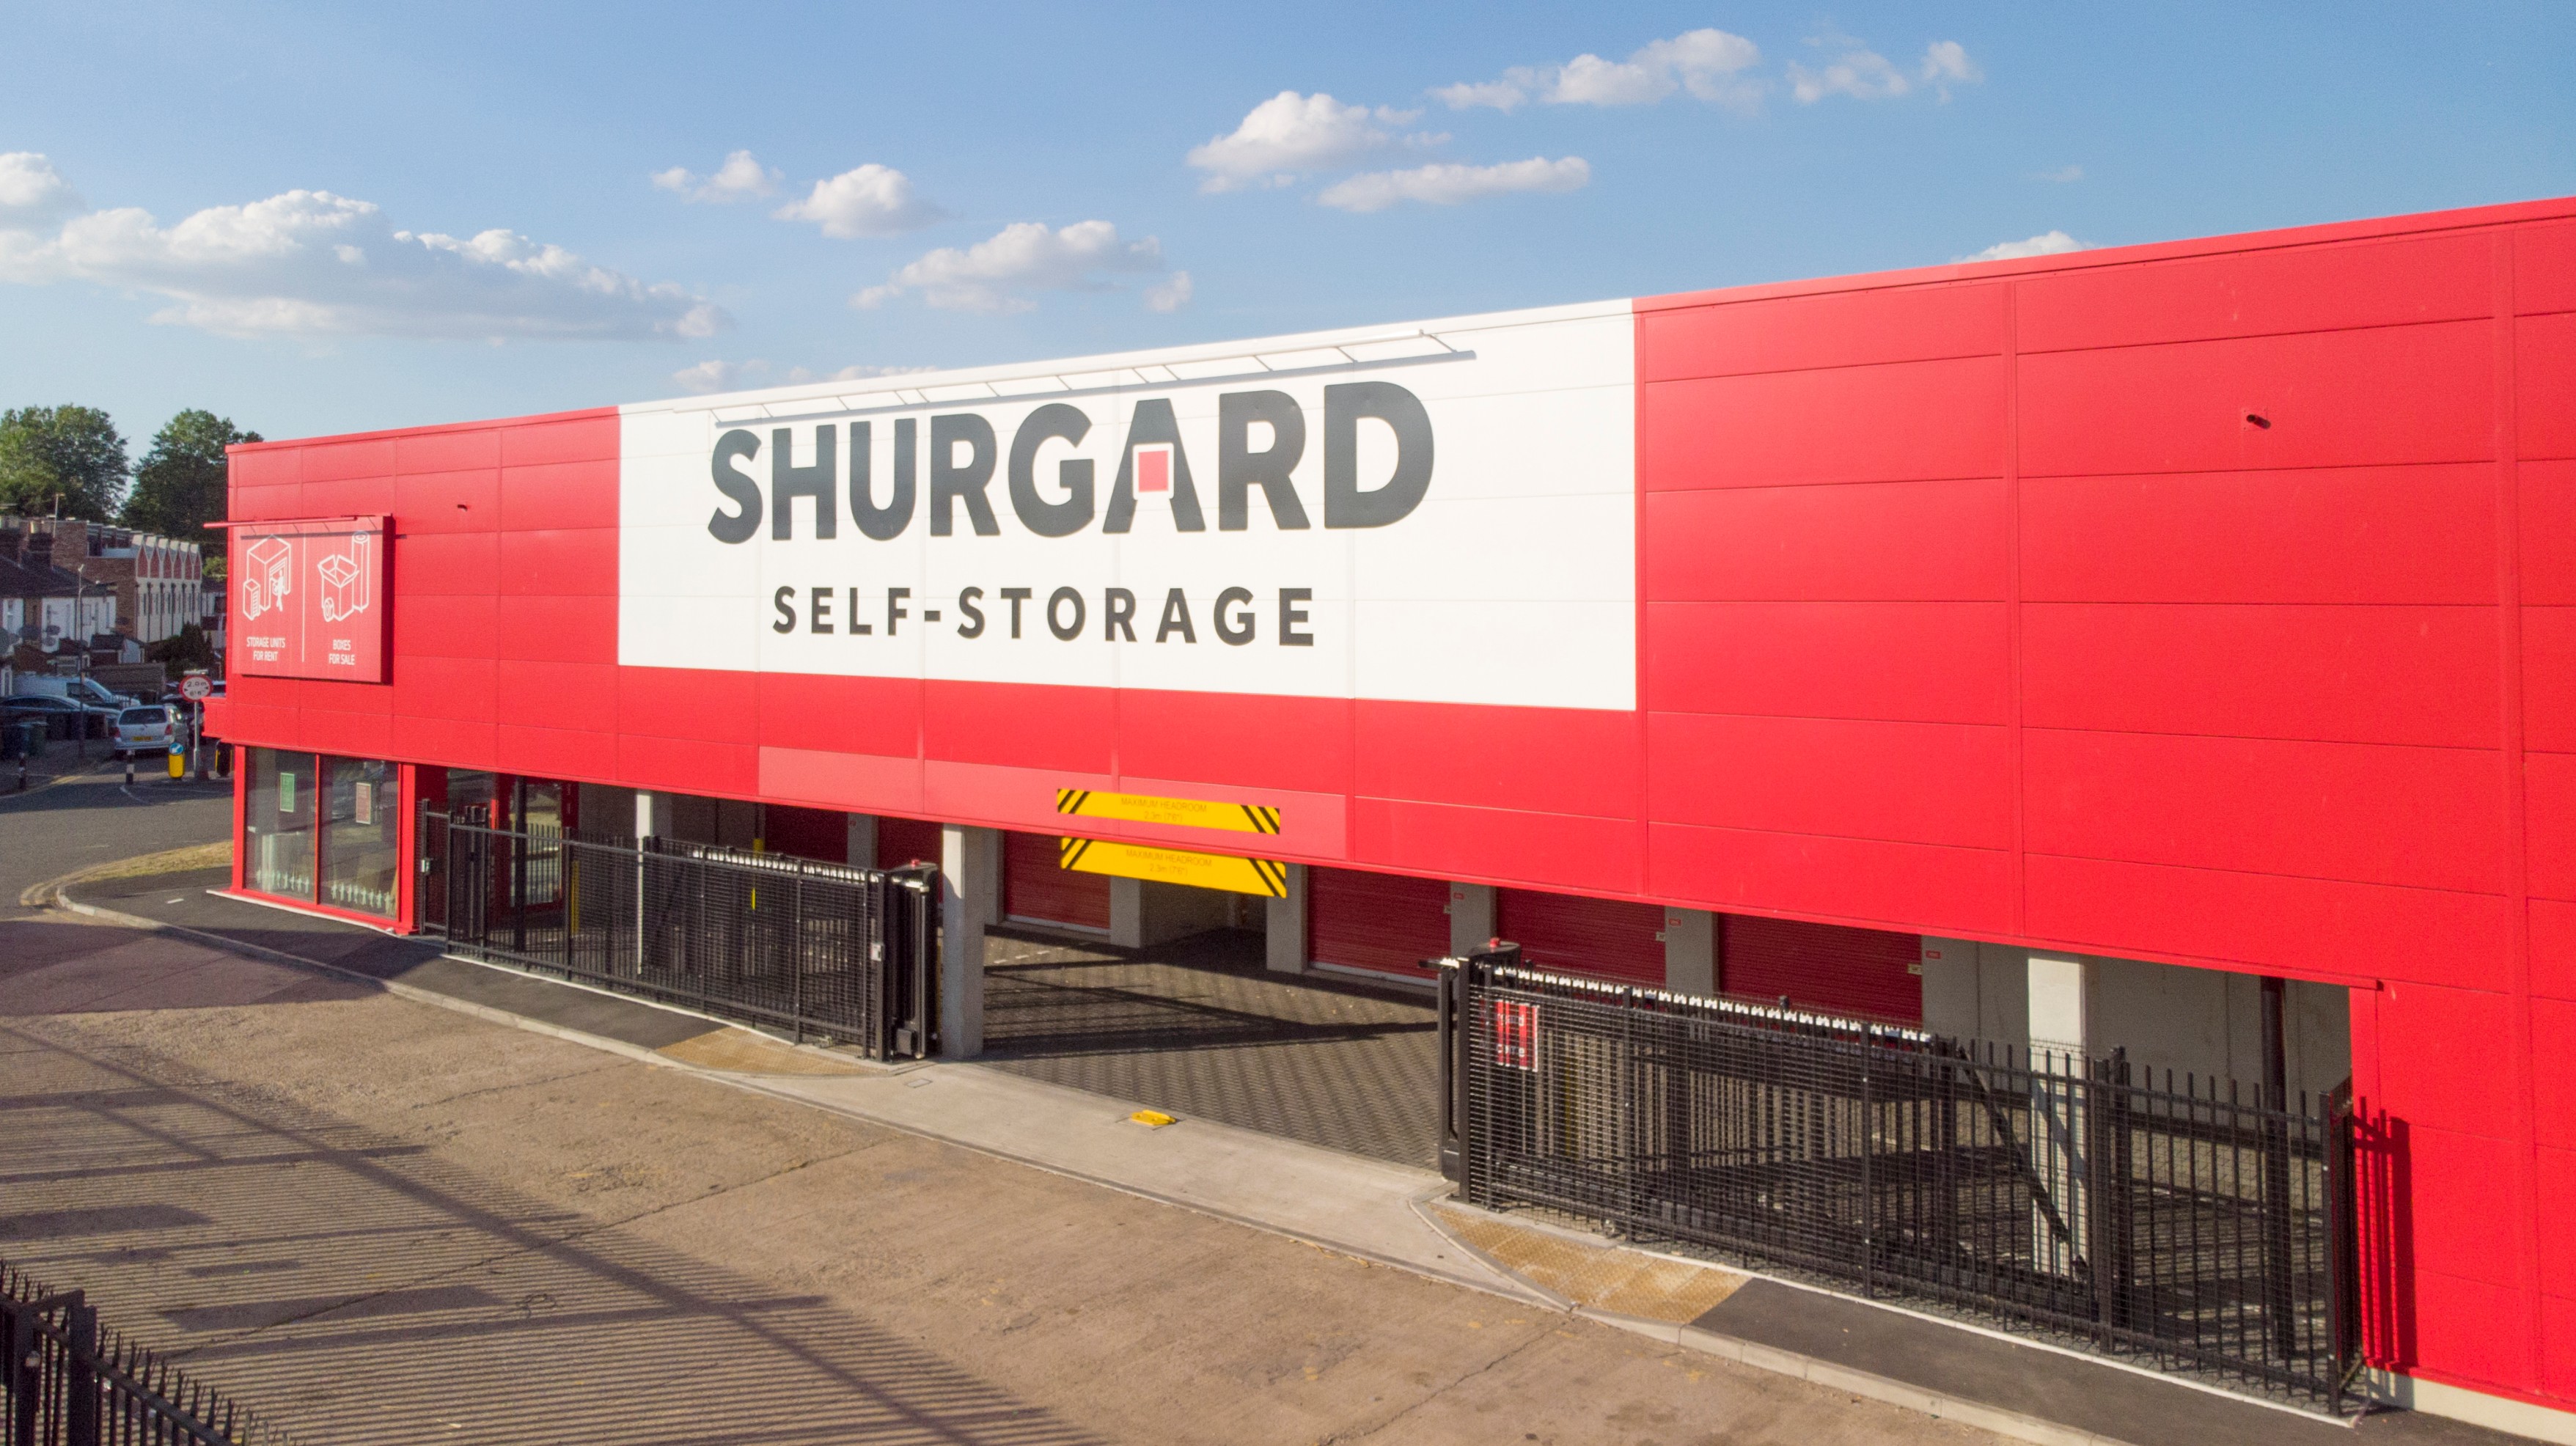 Images Shurgard Self Storage Harrow